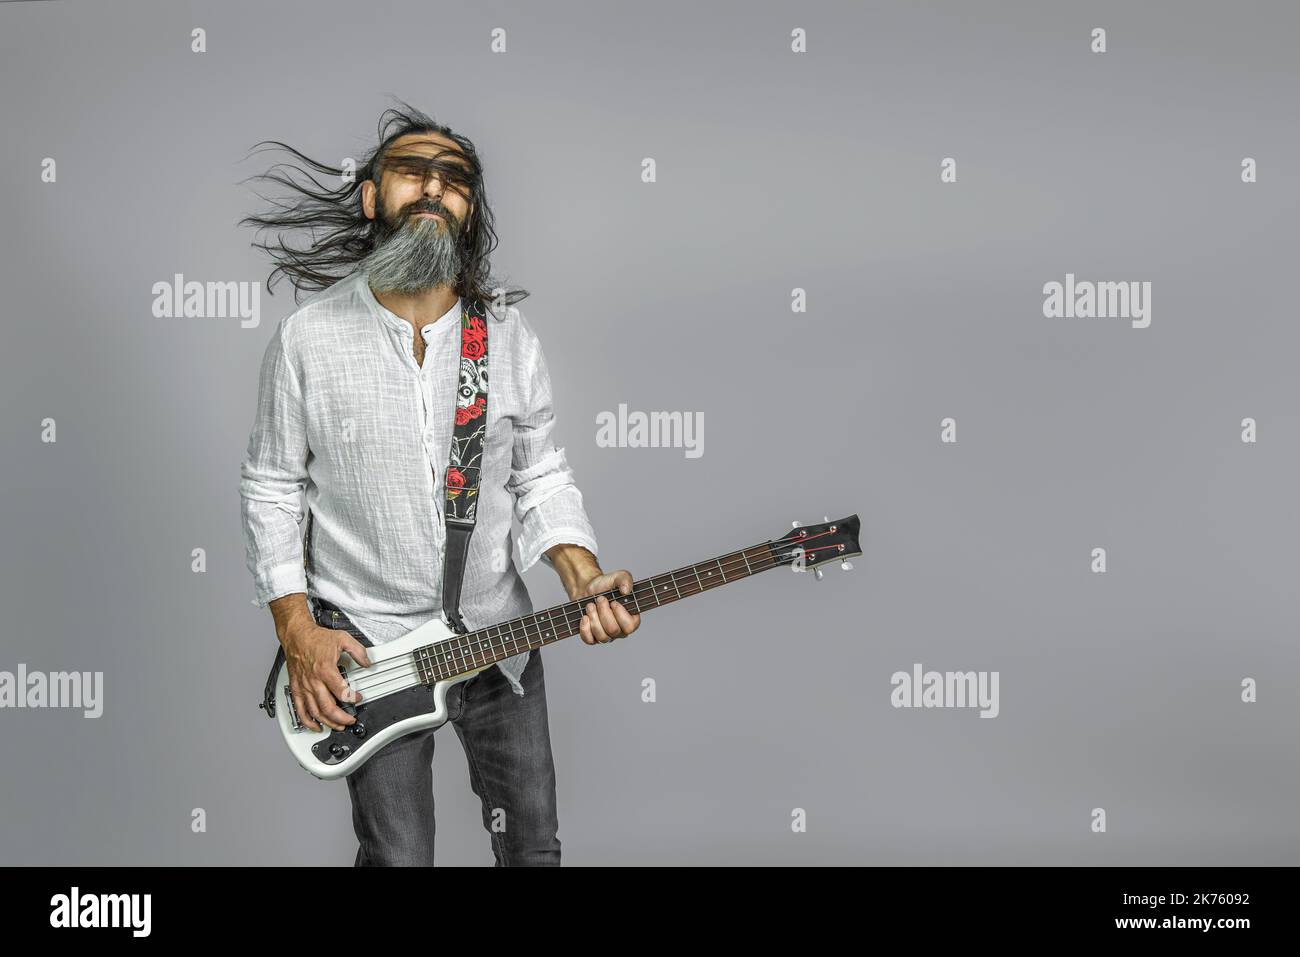 bass player with beard and long hair. studio shot Stock Photo